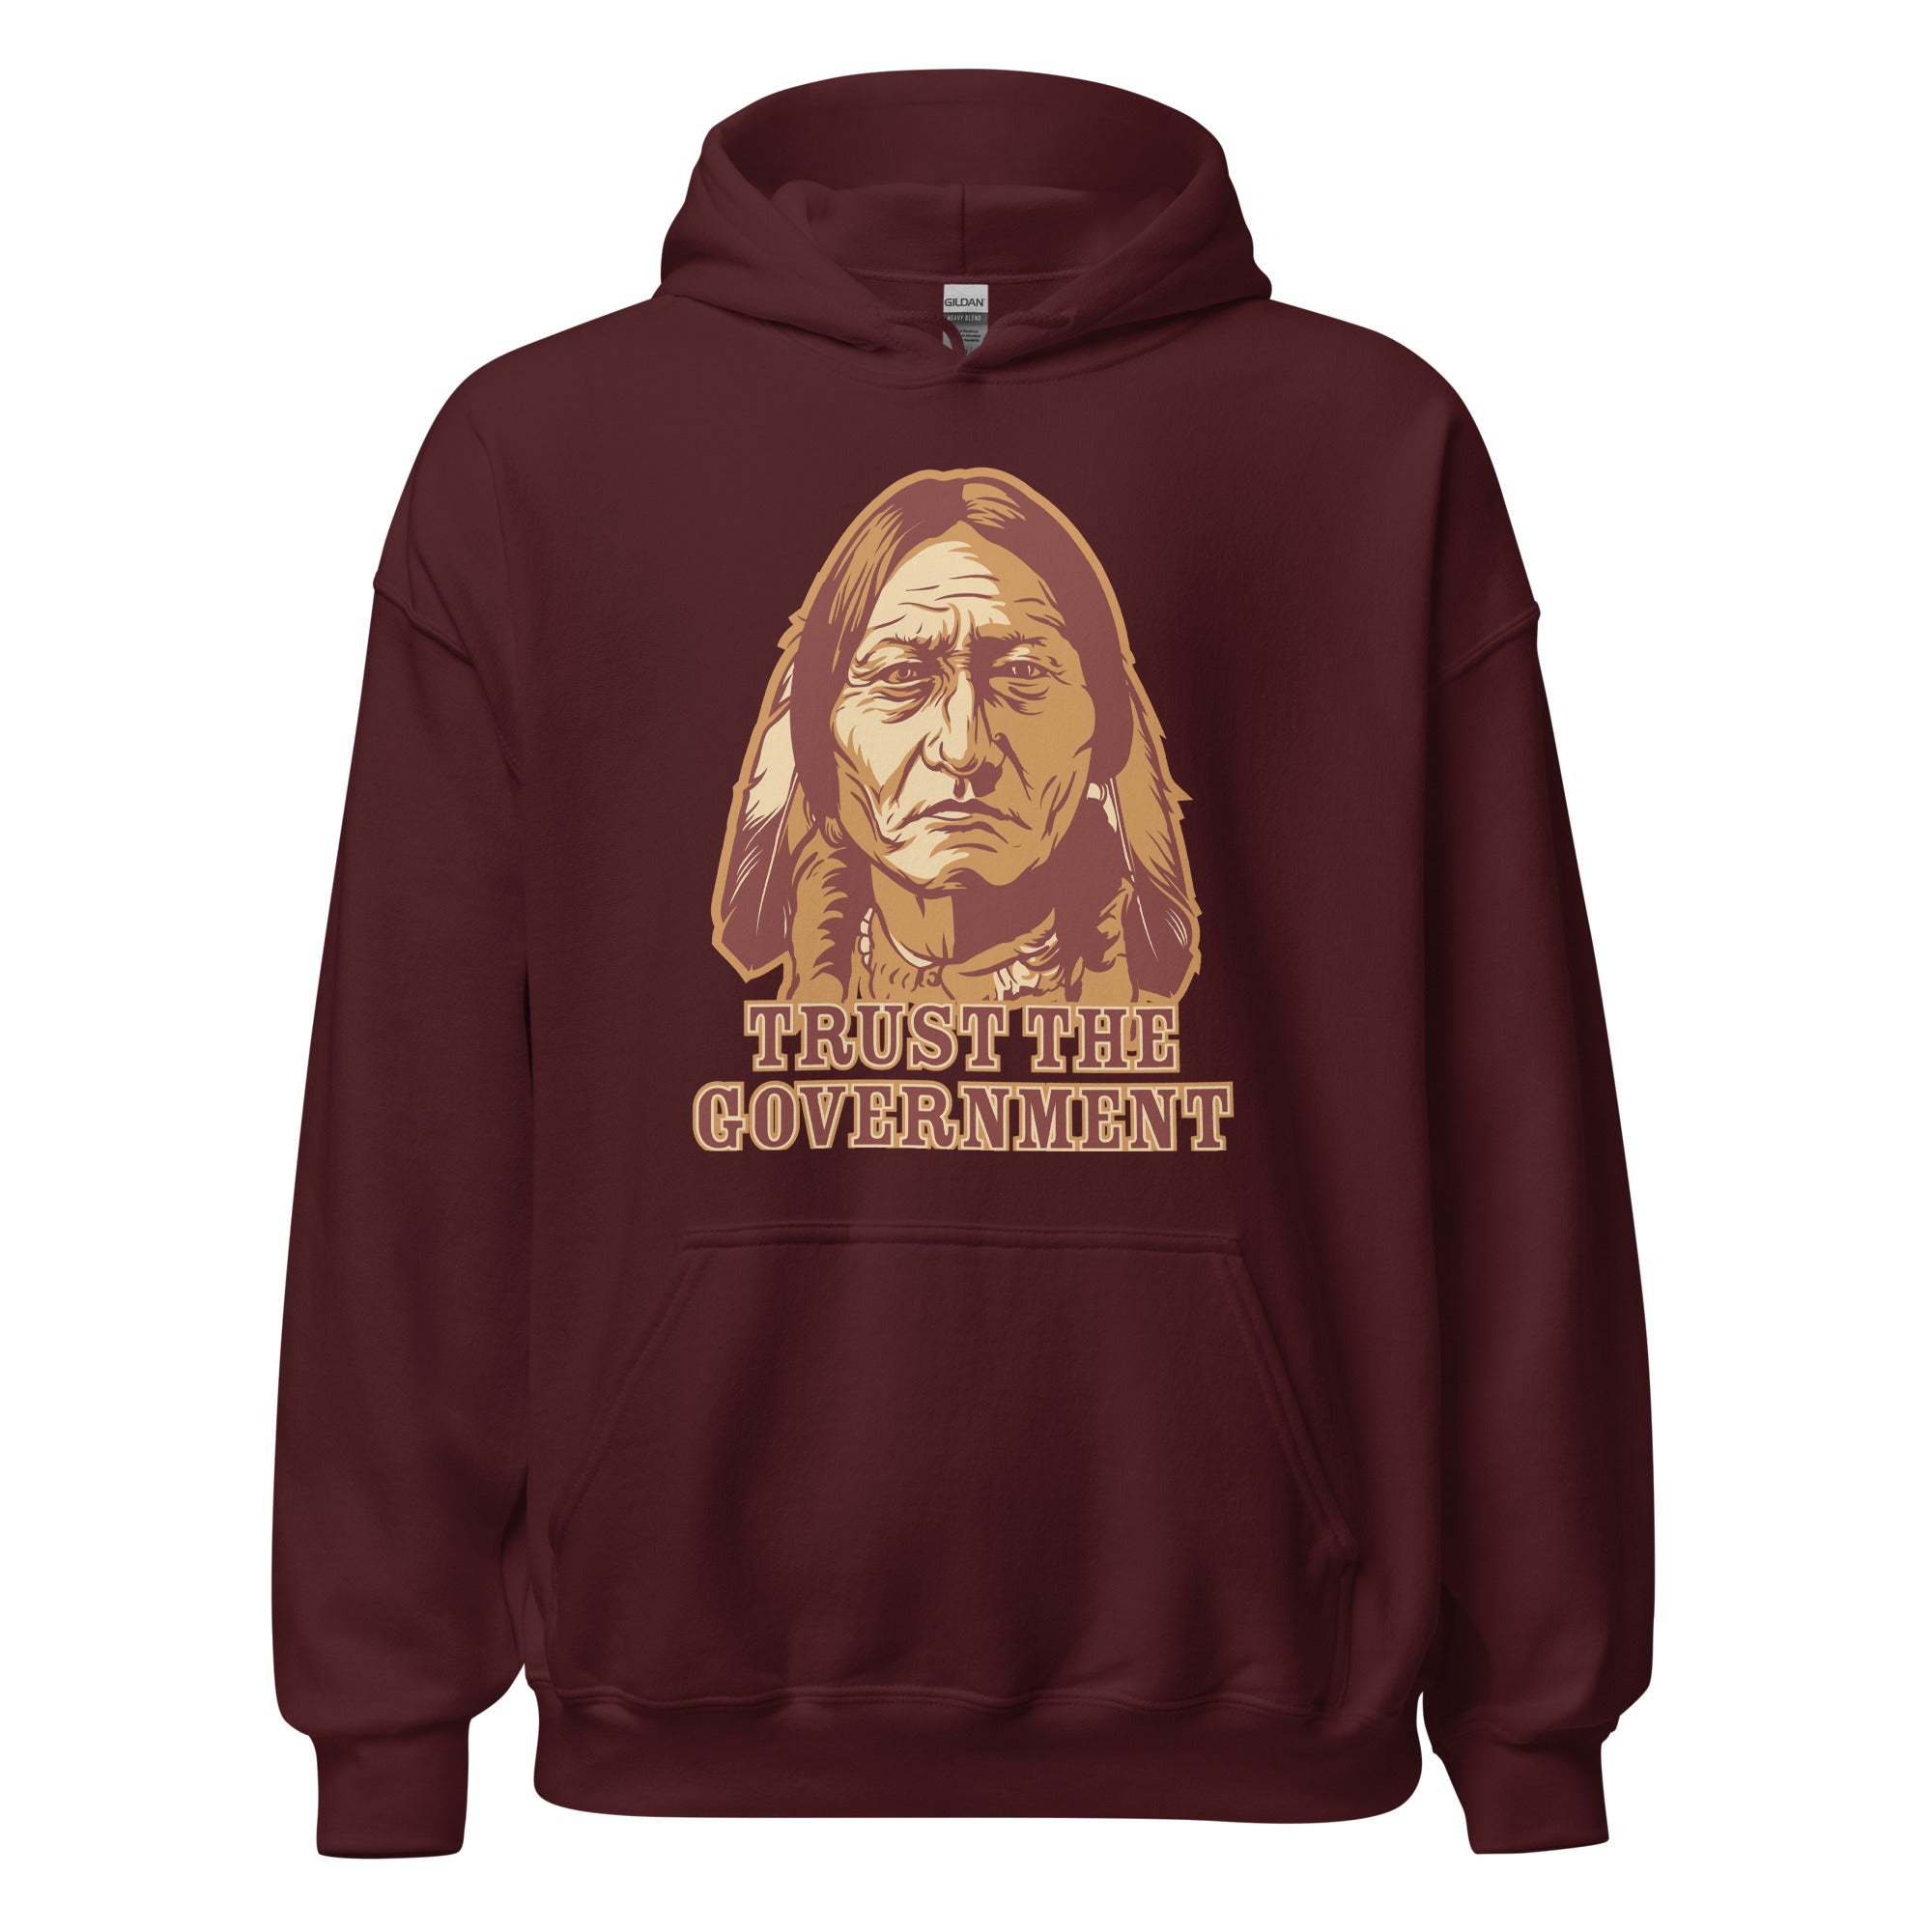 Trust the Government Sitting Bull Pullover Hoodie Sweatshirt